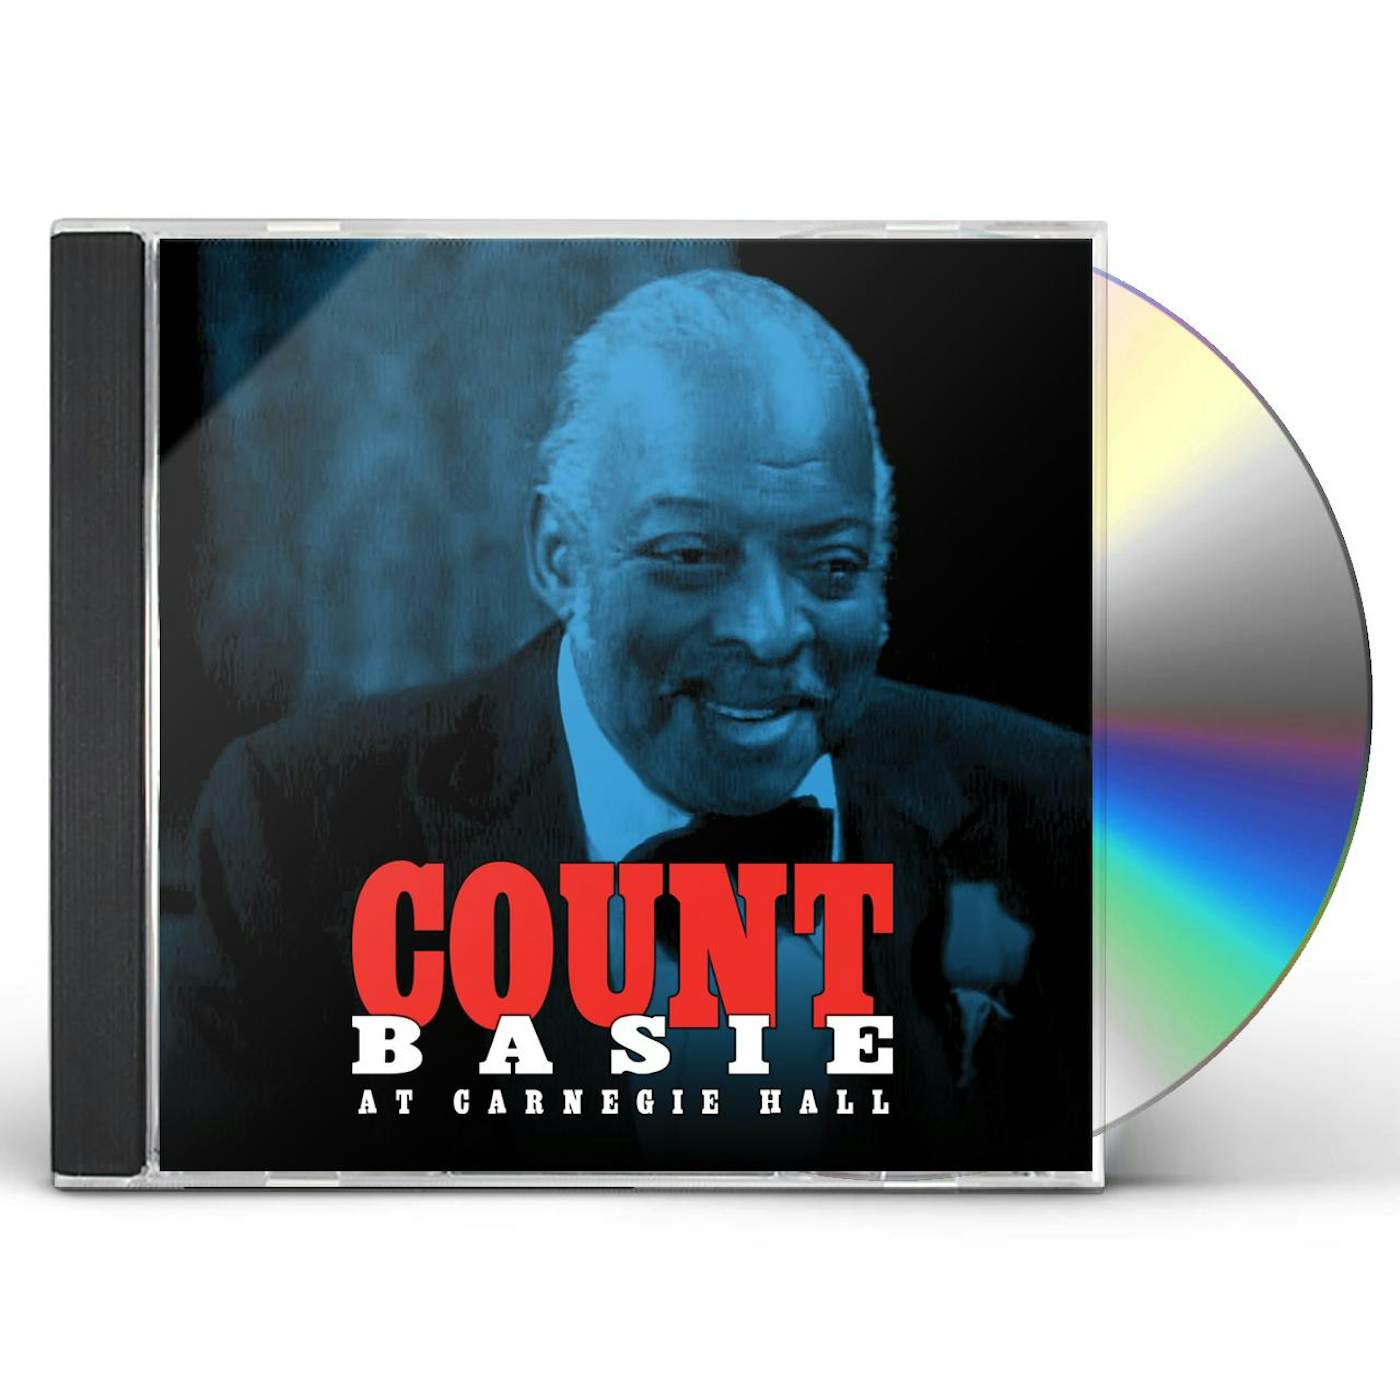 COUNT BASIE AT CARNEGIE HALL CD